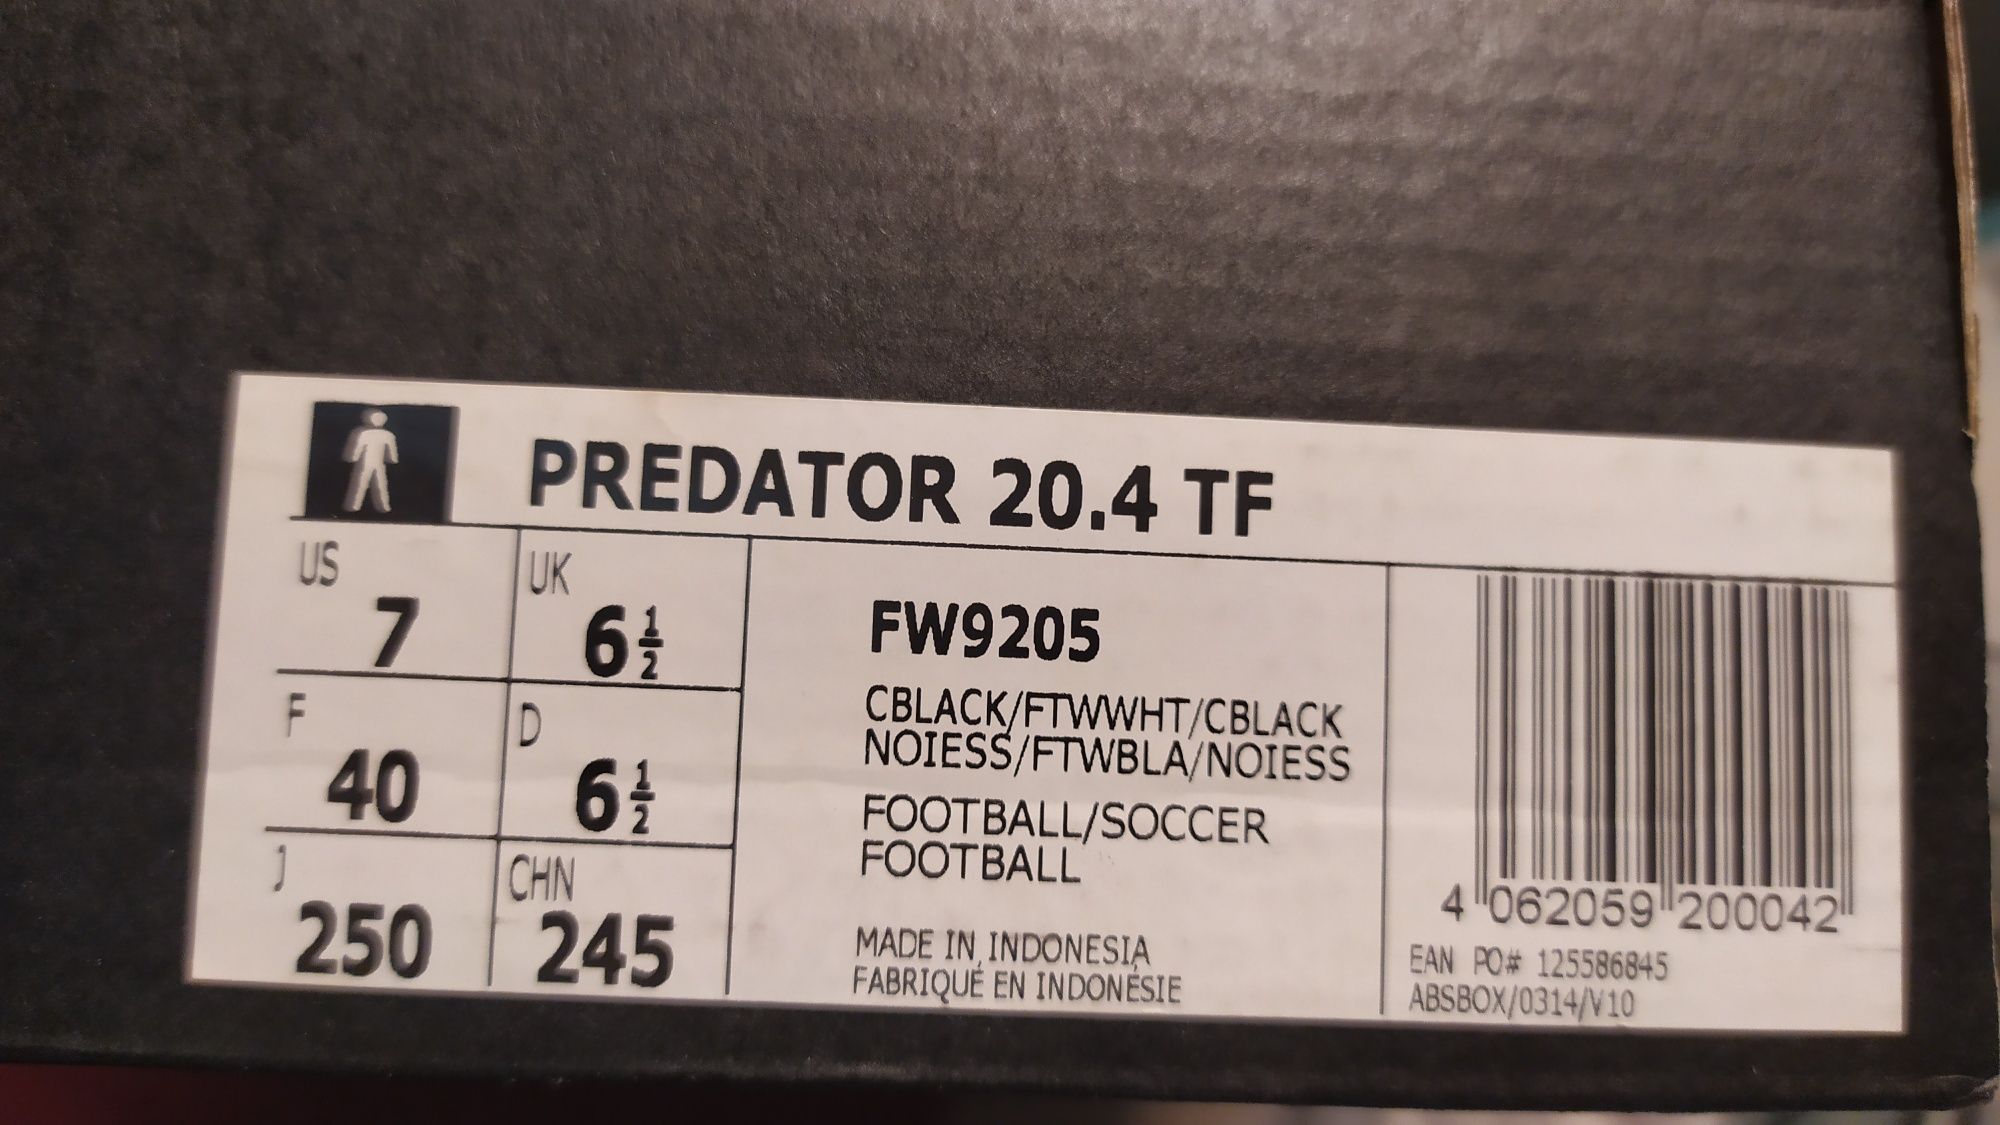 Adidas Predator Buty piłkarskie